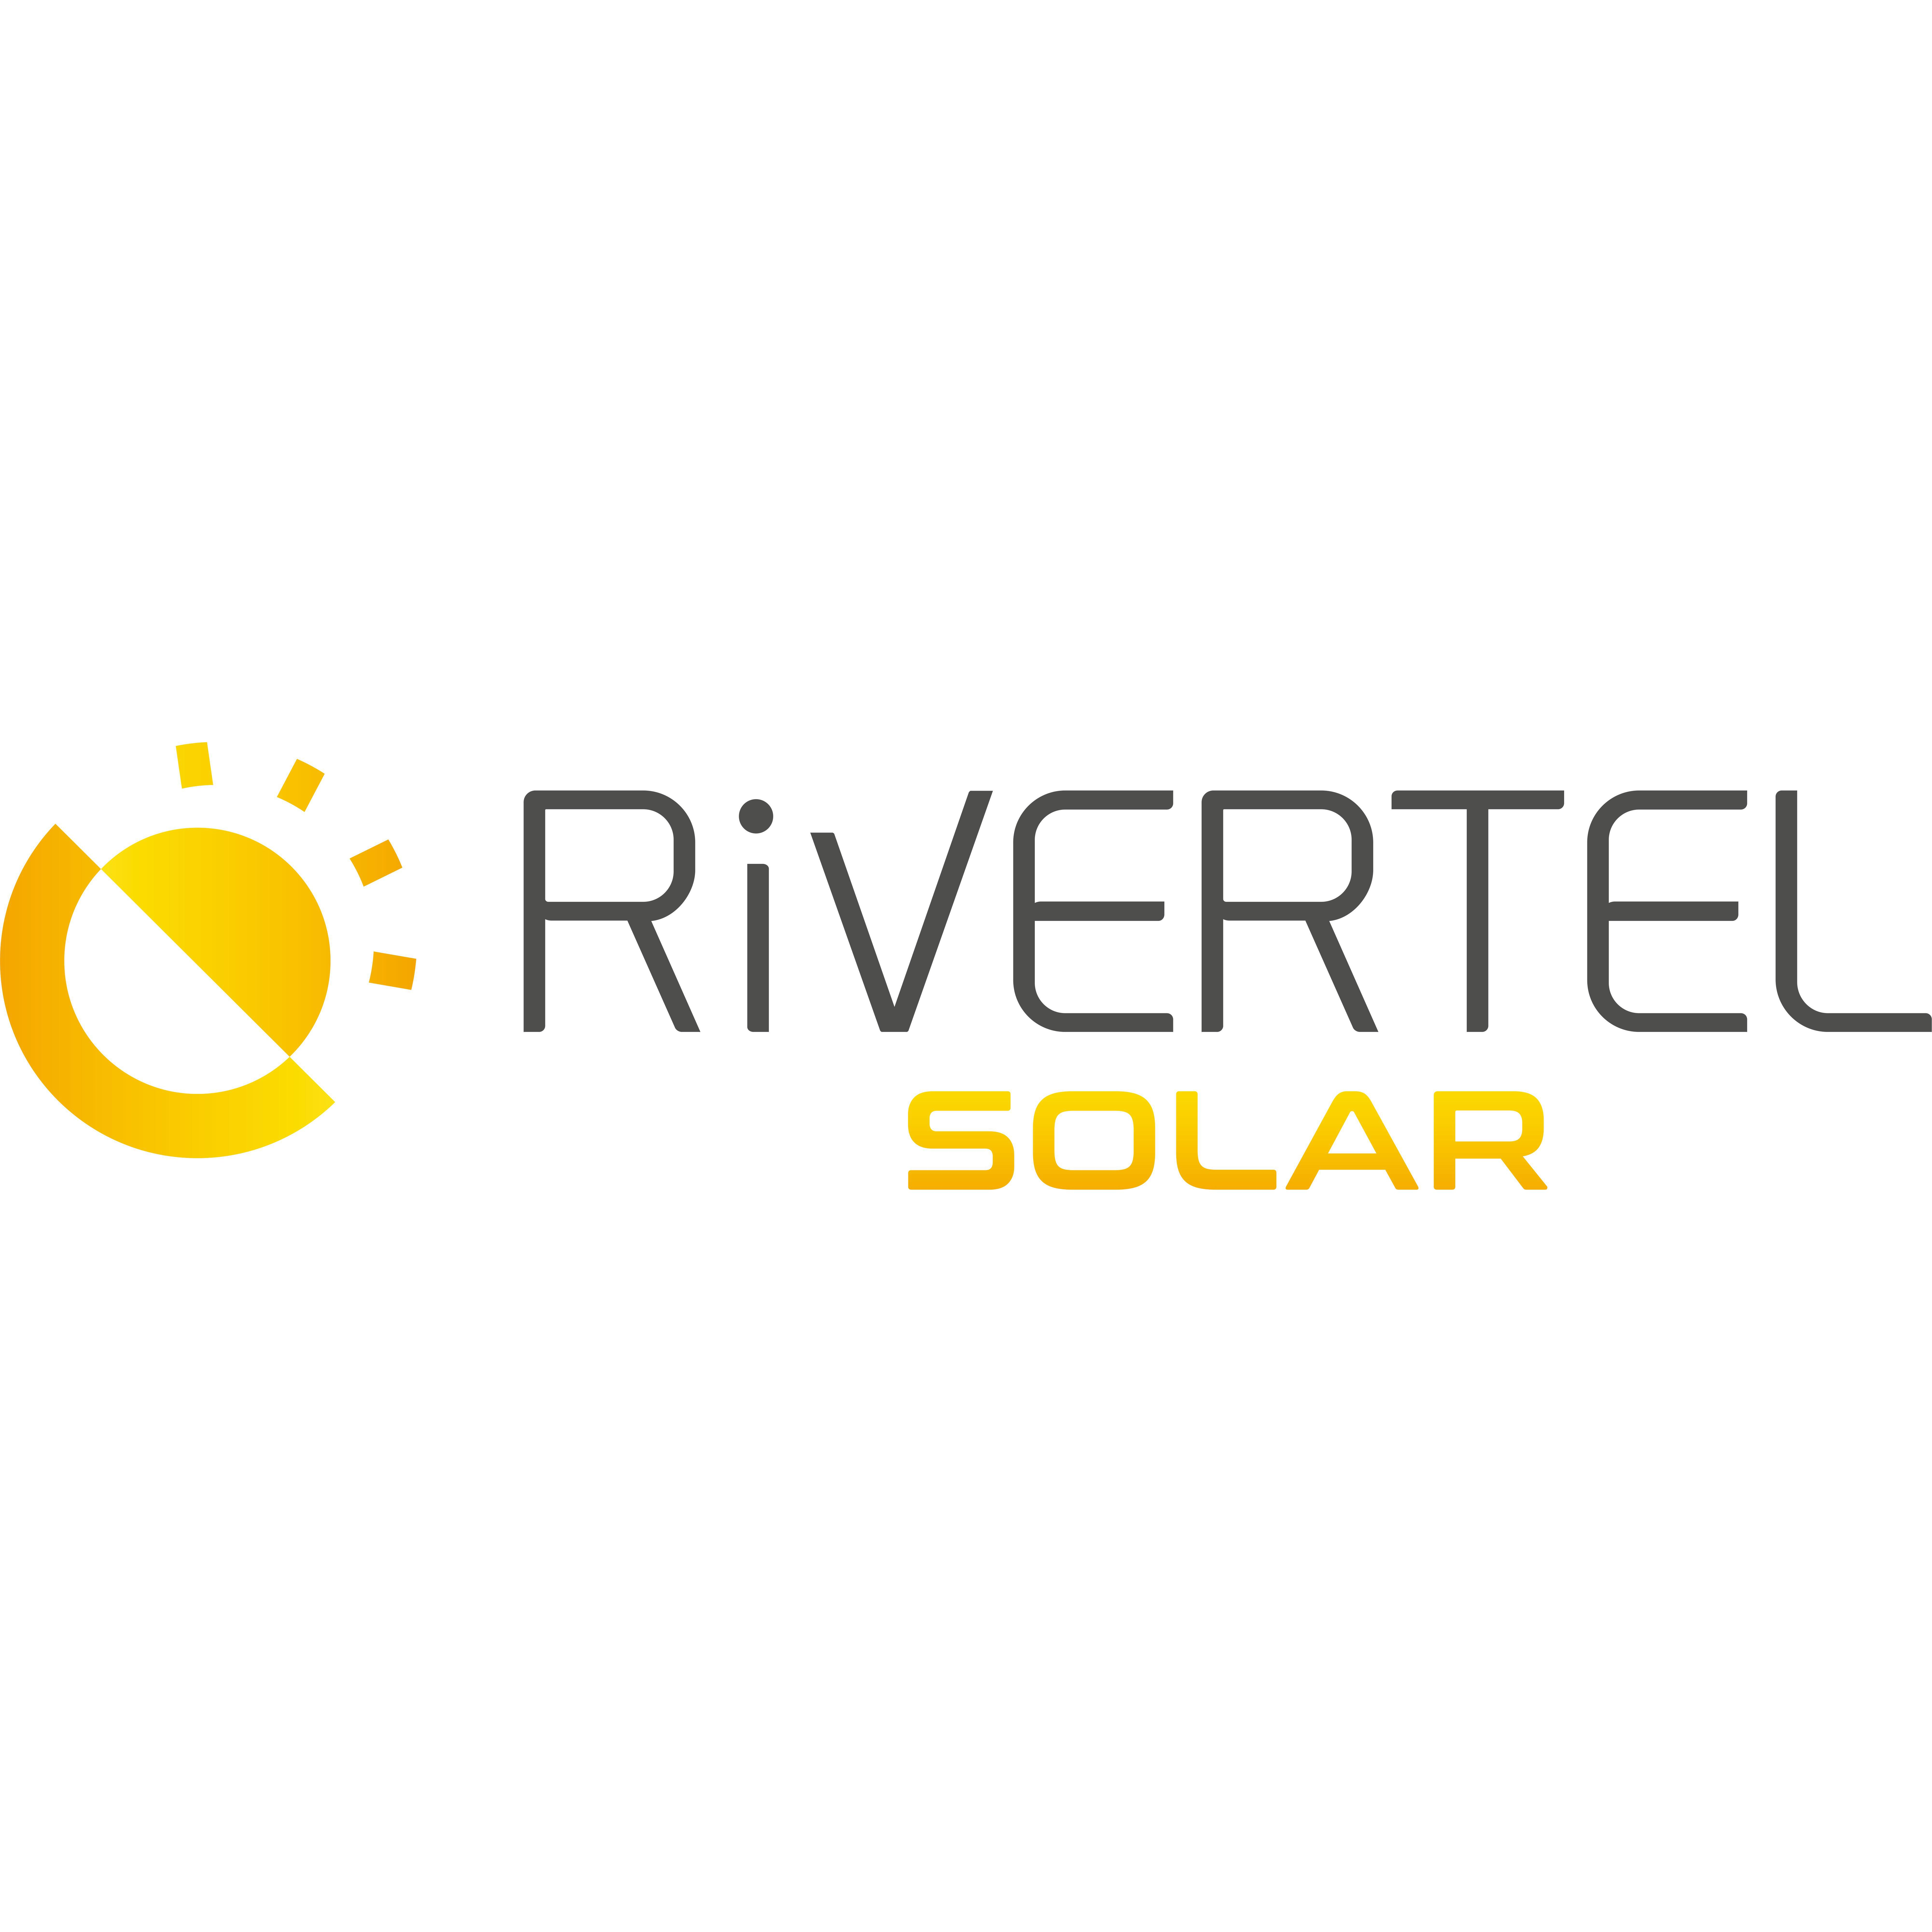 Rivertel Solar Logo